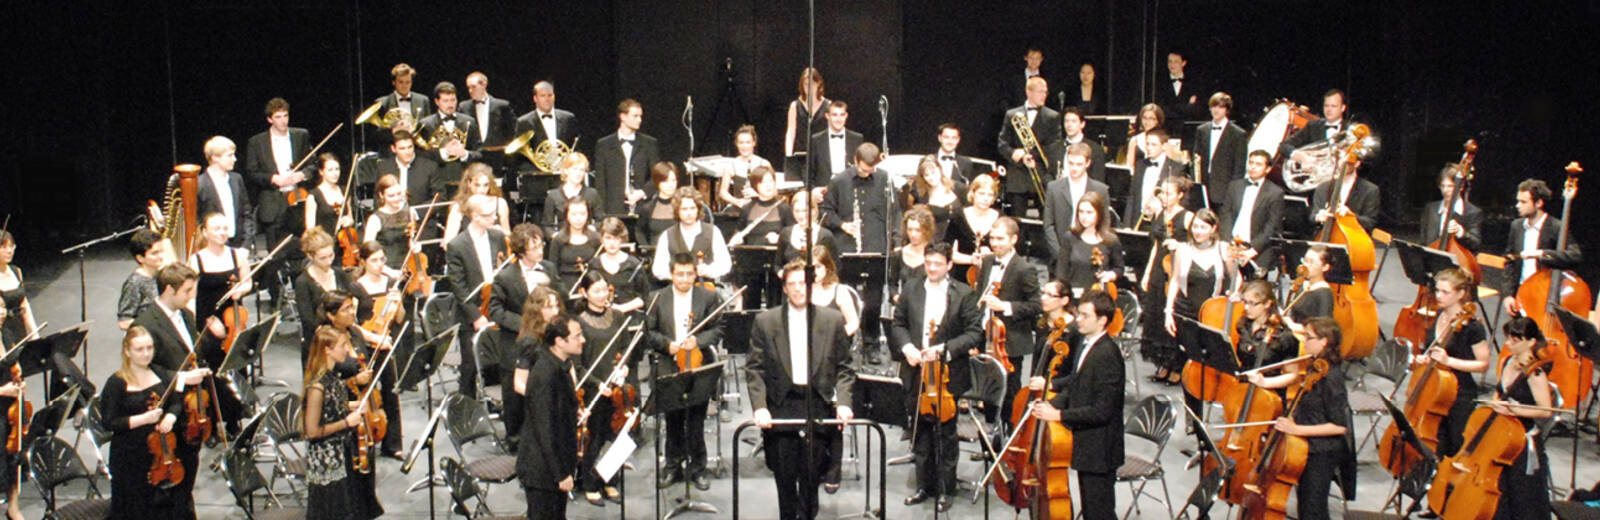 Orchestre de Saint Germain-en-Laye [En attente de report]